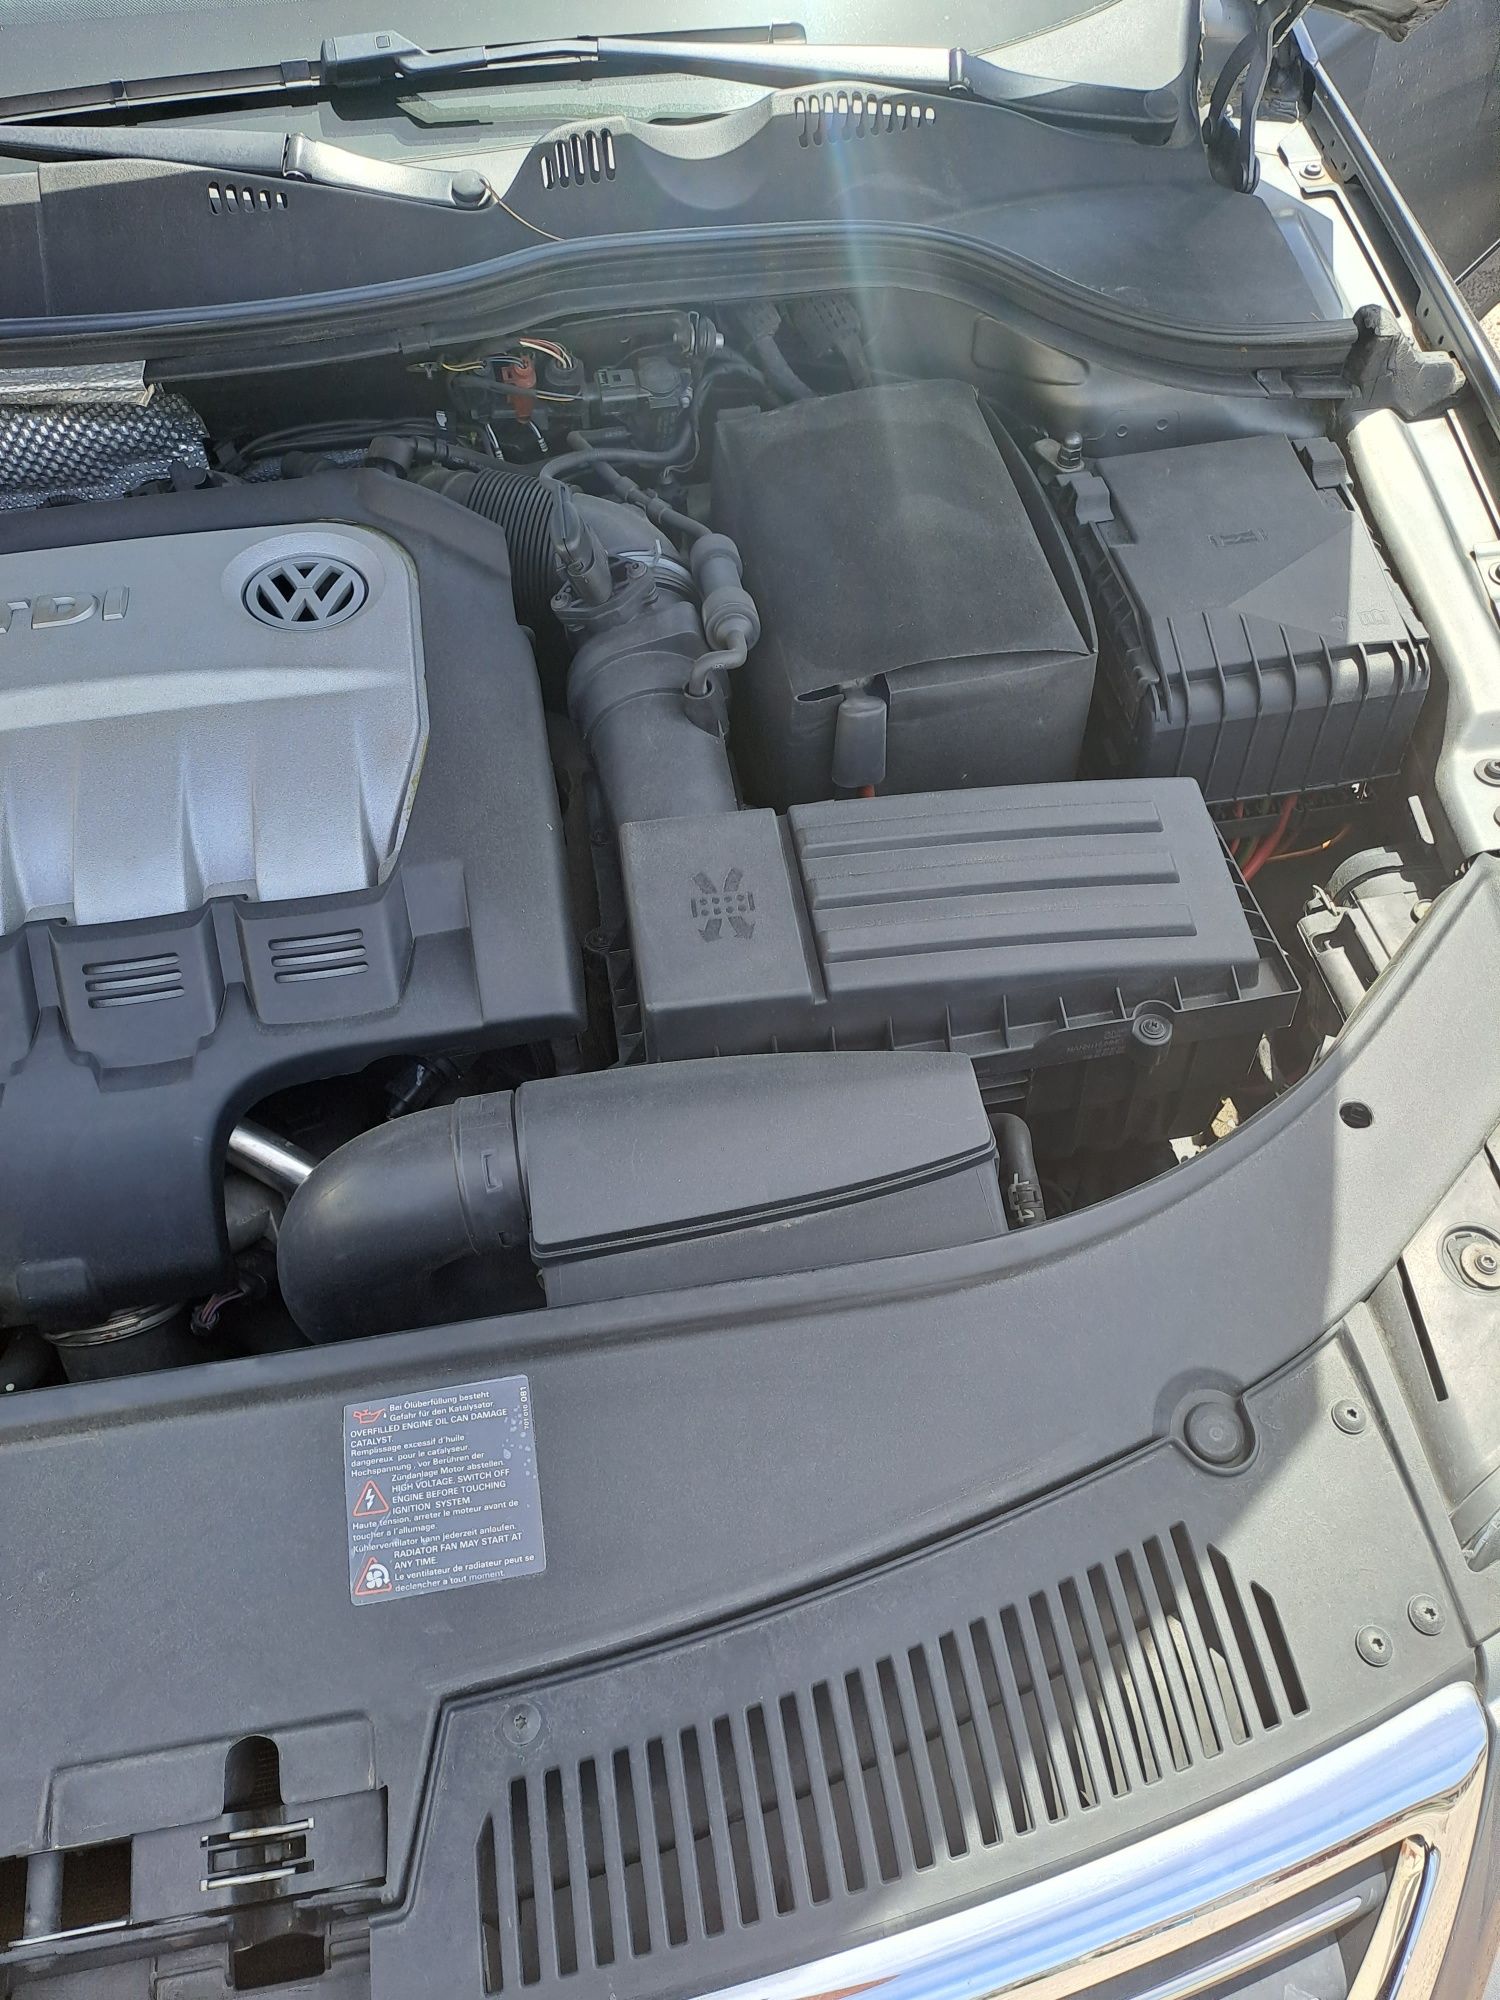 VW Passat higline 2.0 TDI 170cv